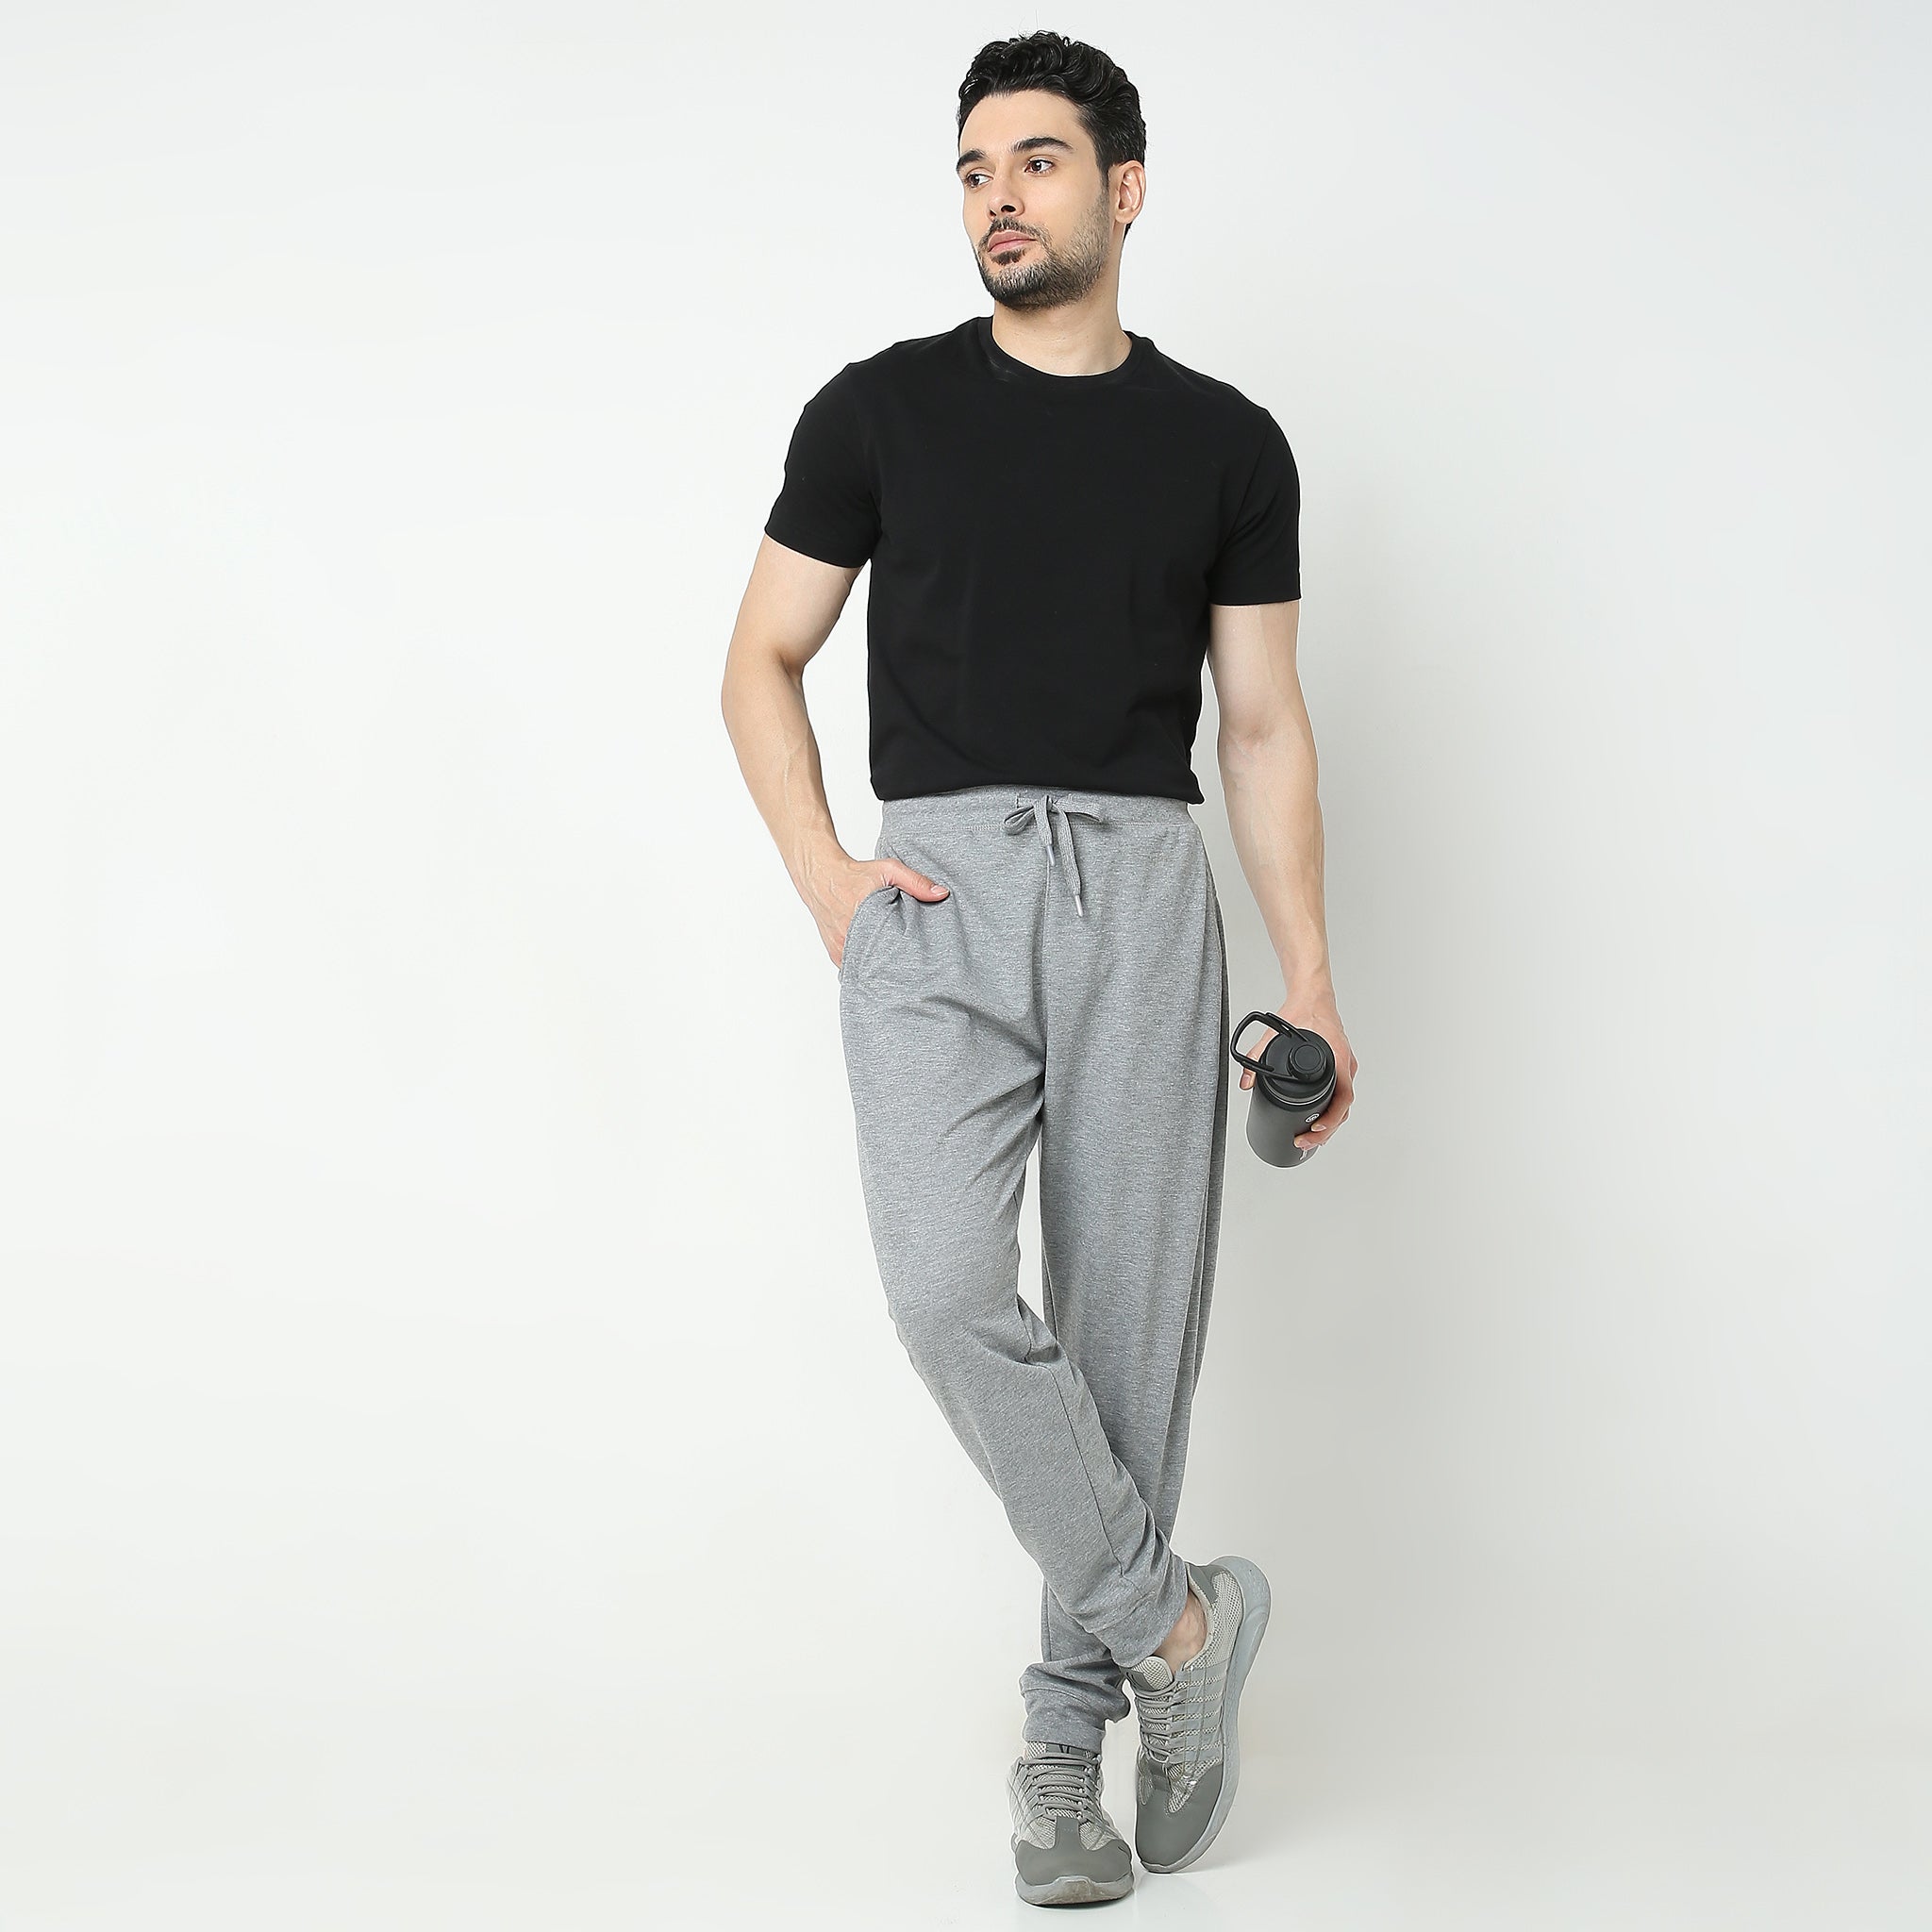 Men's Track Pants Online: Low Price Offer on Track Pants for Men